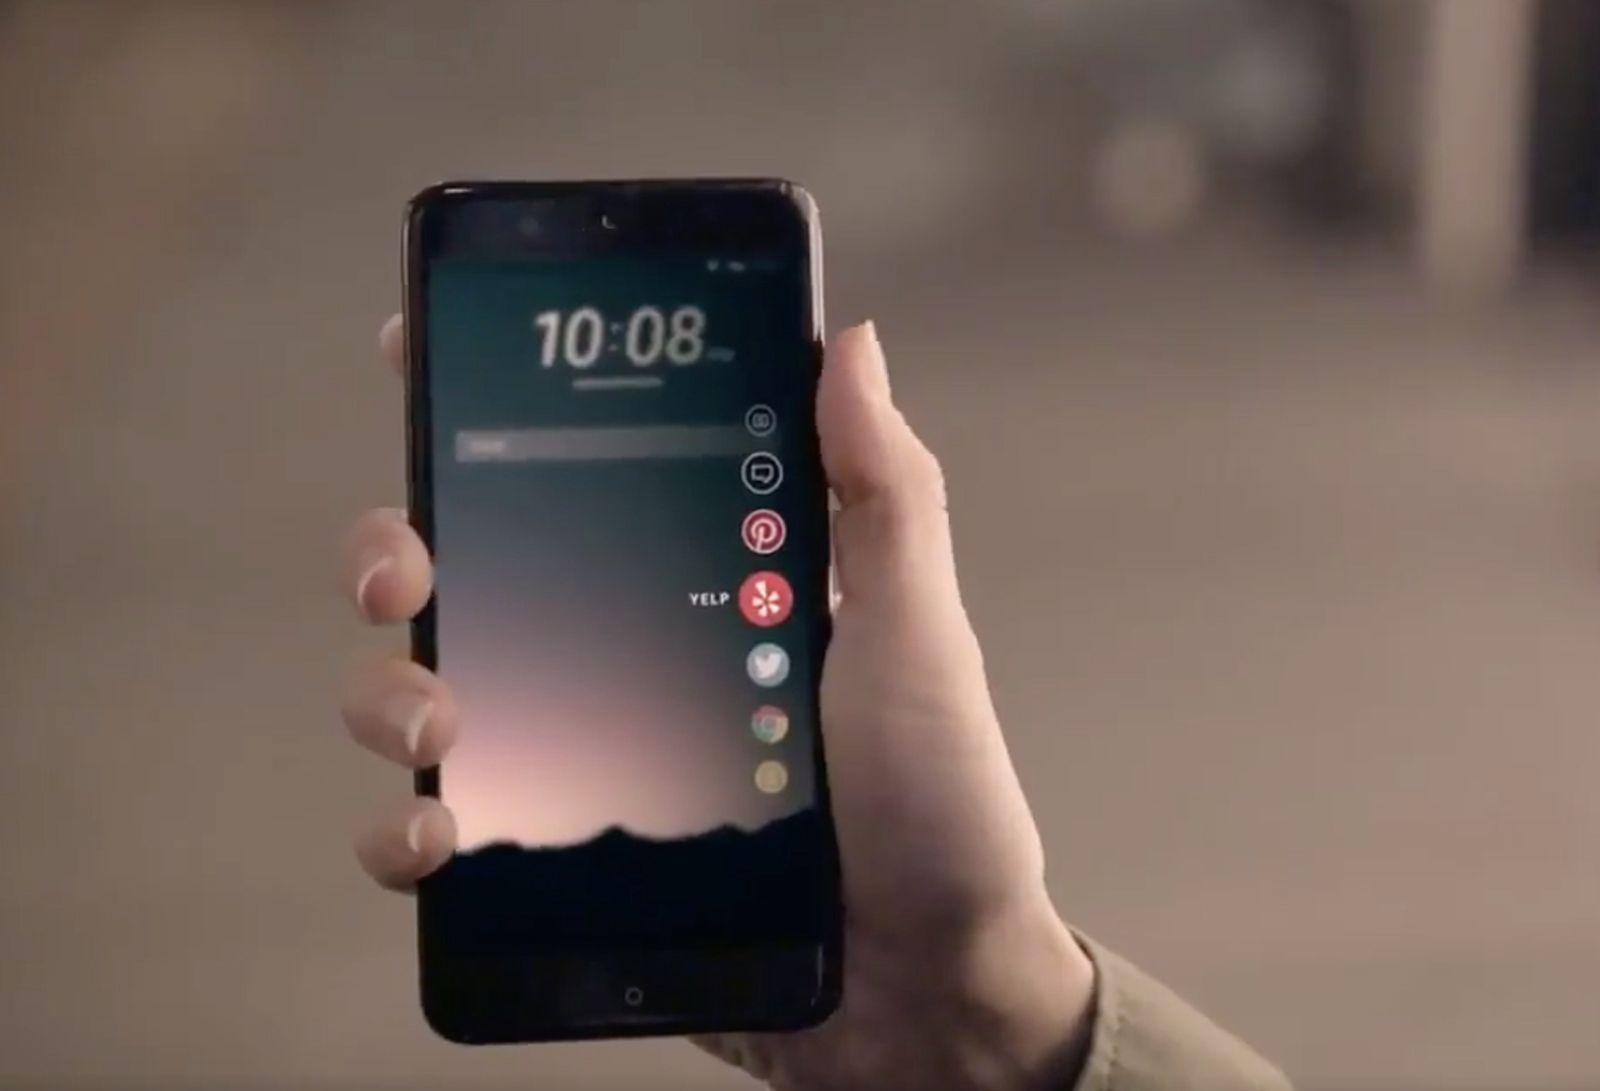 htc ocean leak suggests phone will offer edge sense display feature image 1